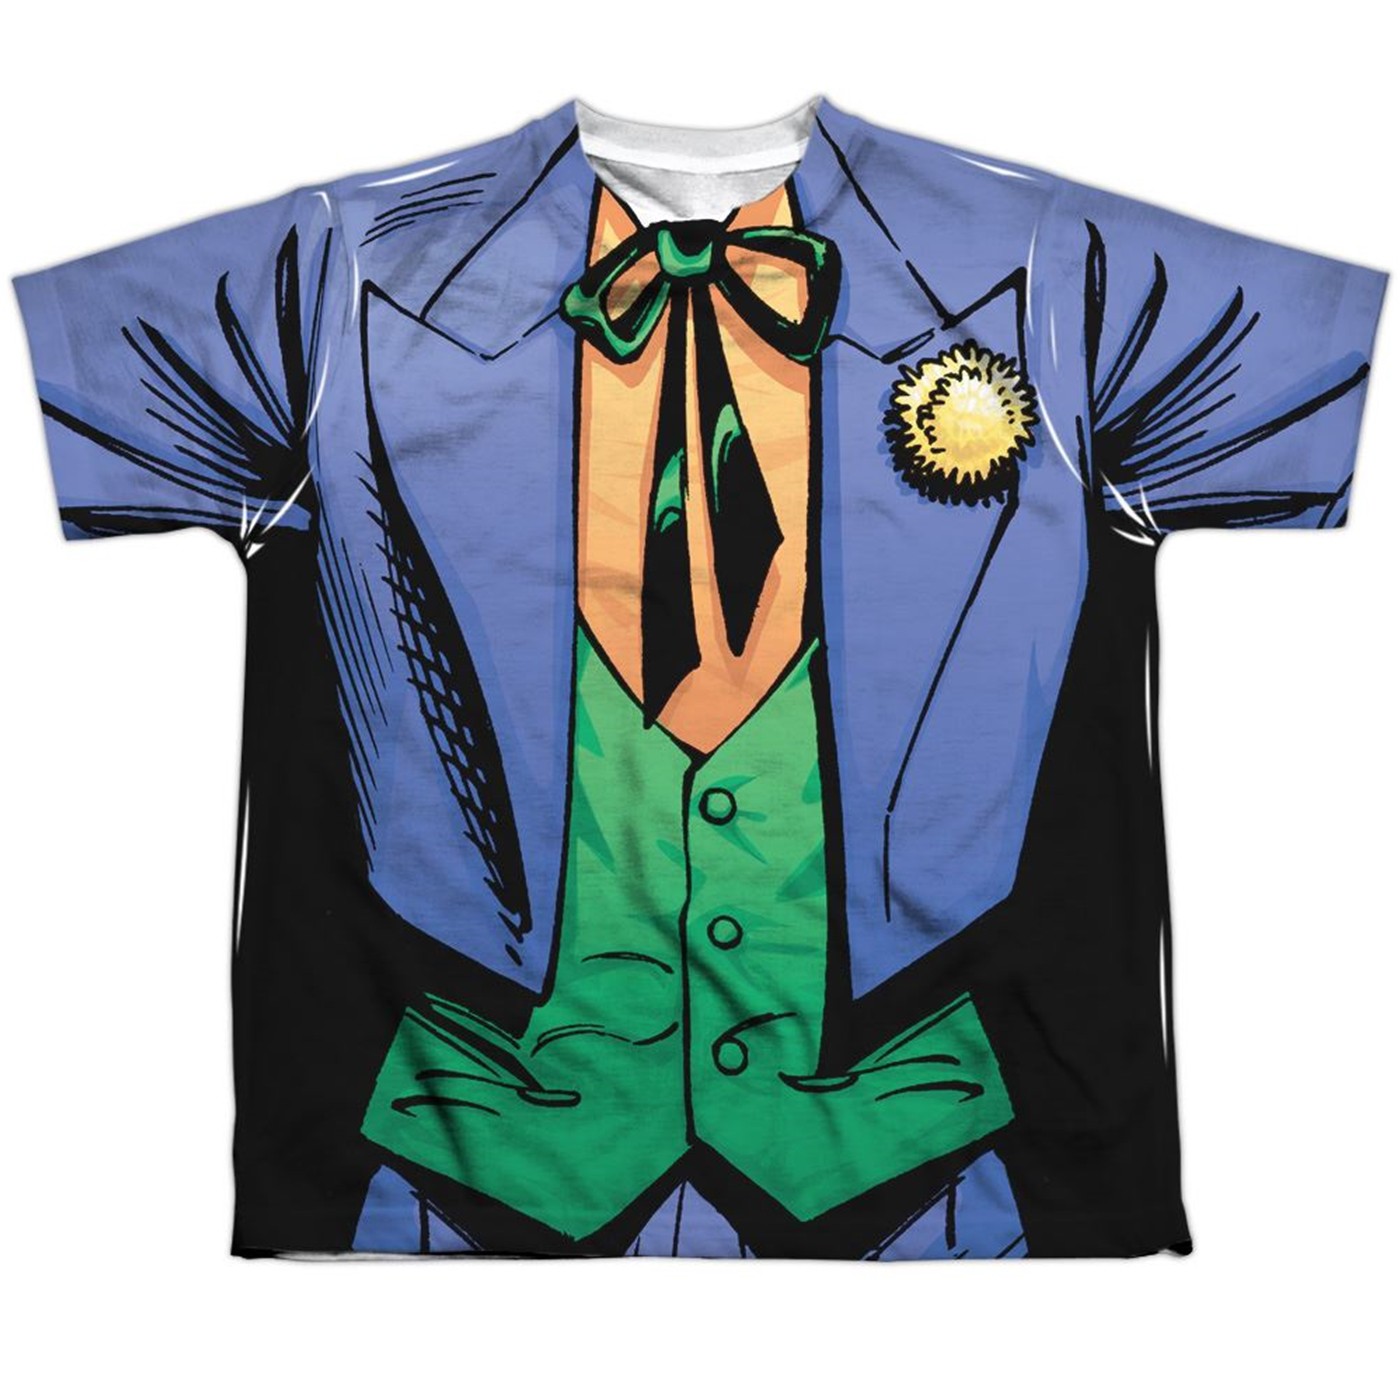 Joker Uniform Sublimated Costume Kid's T-Shirt